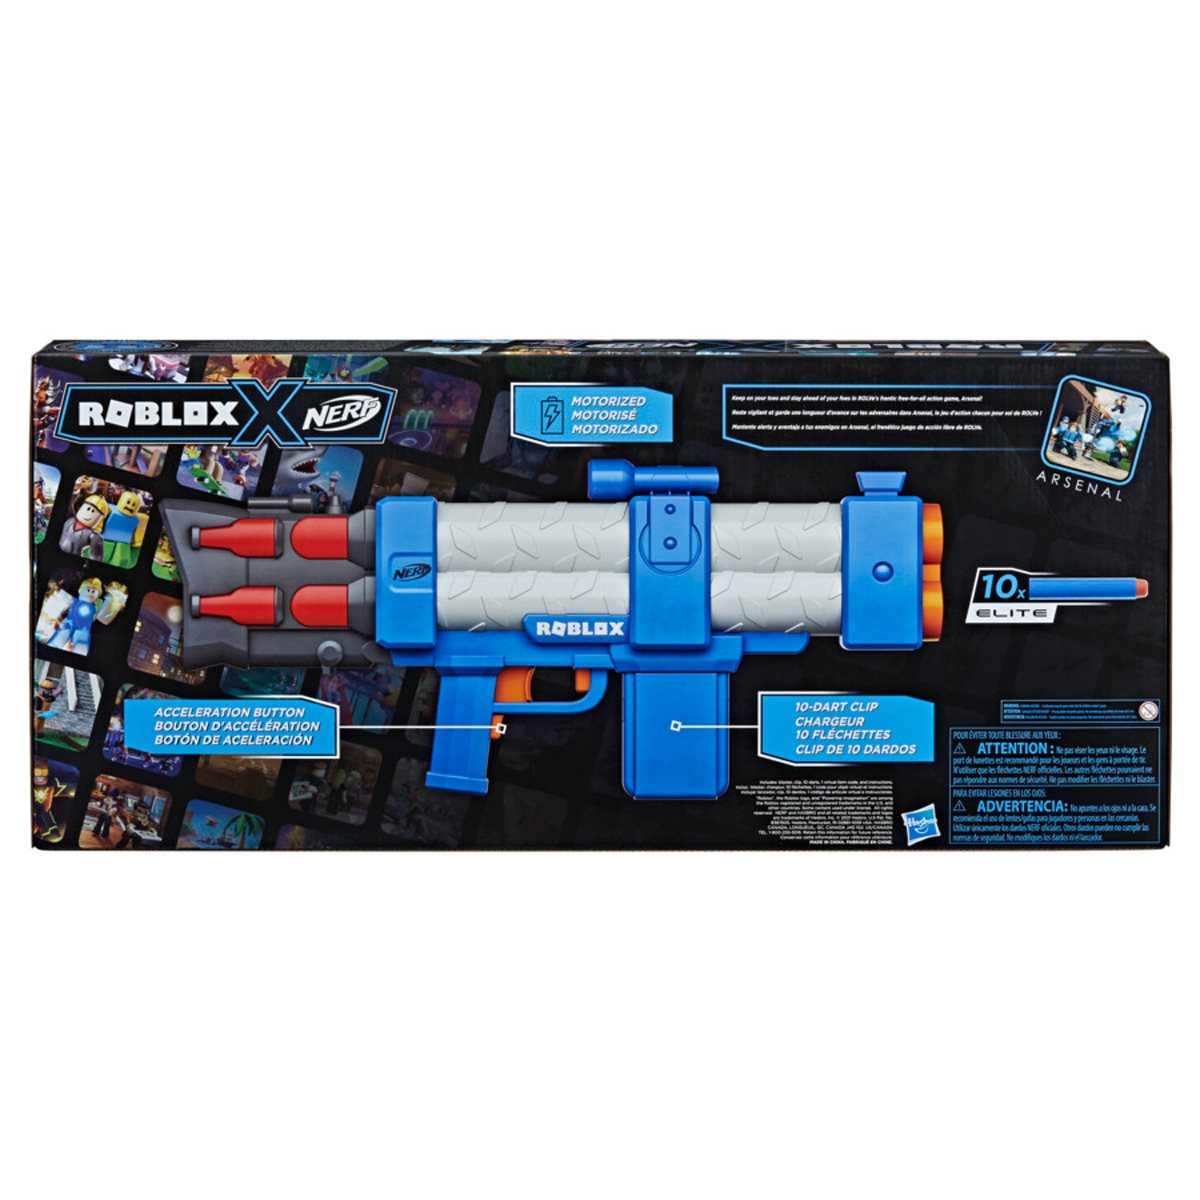 Nerf Roblox Arsenal: Pulse Laser Blaster – Albagame